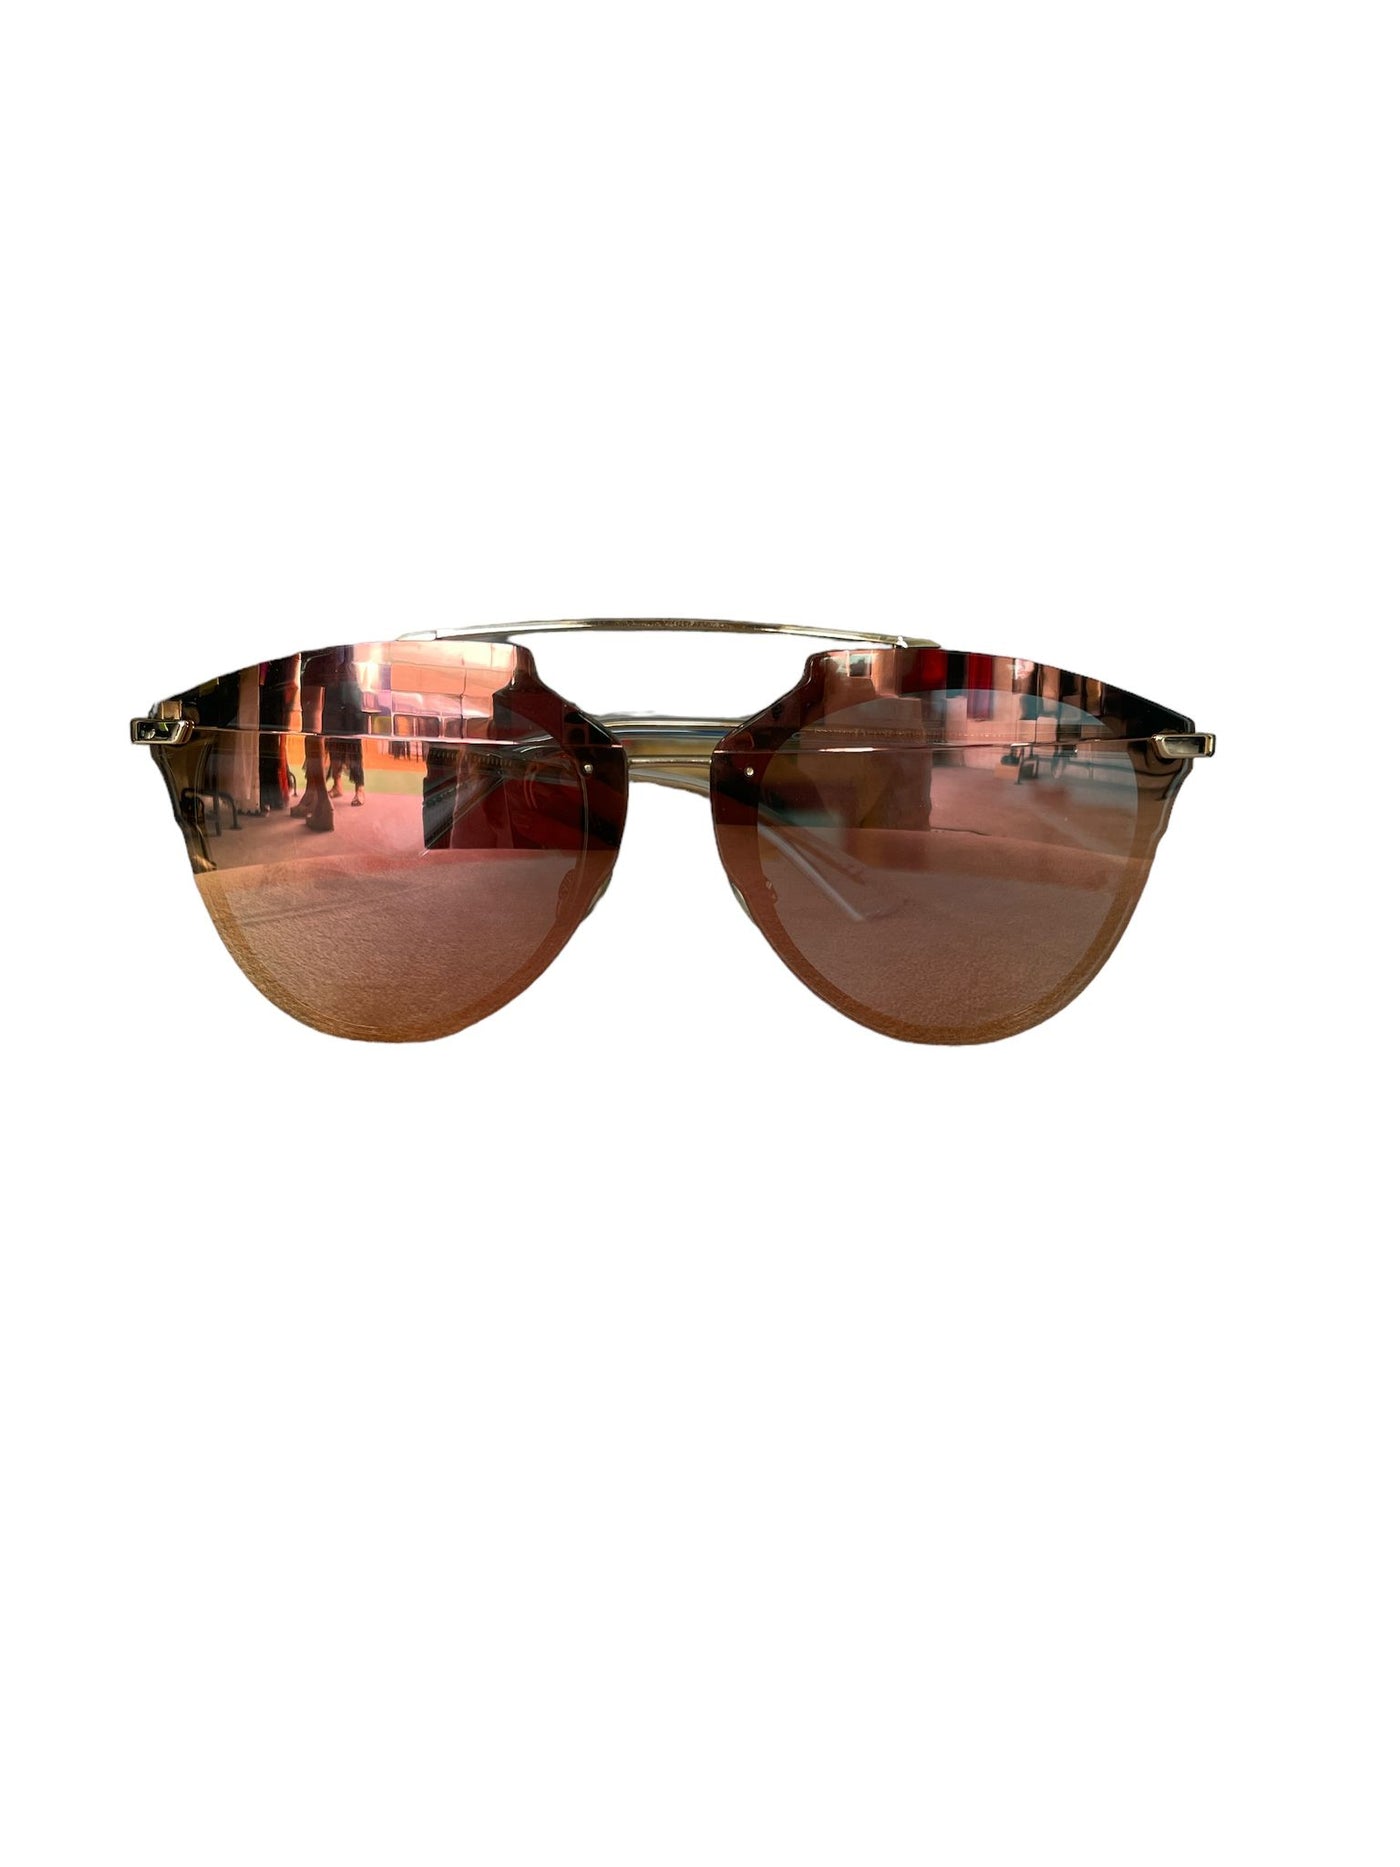 Dior Reflected P sunglasses